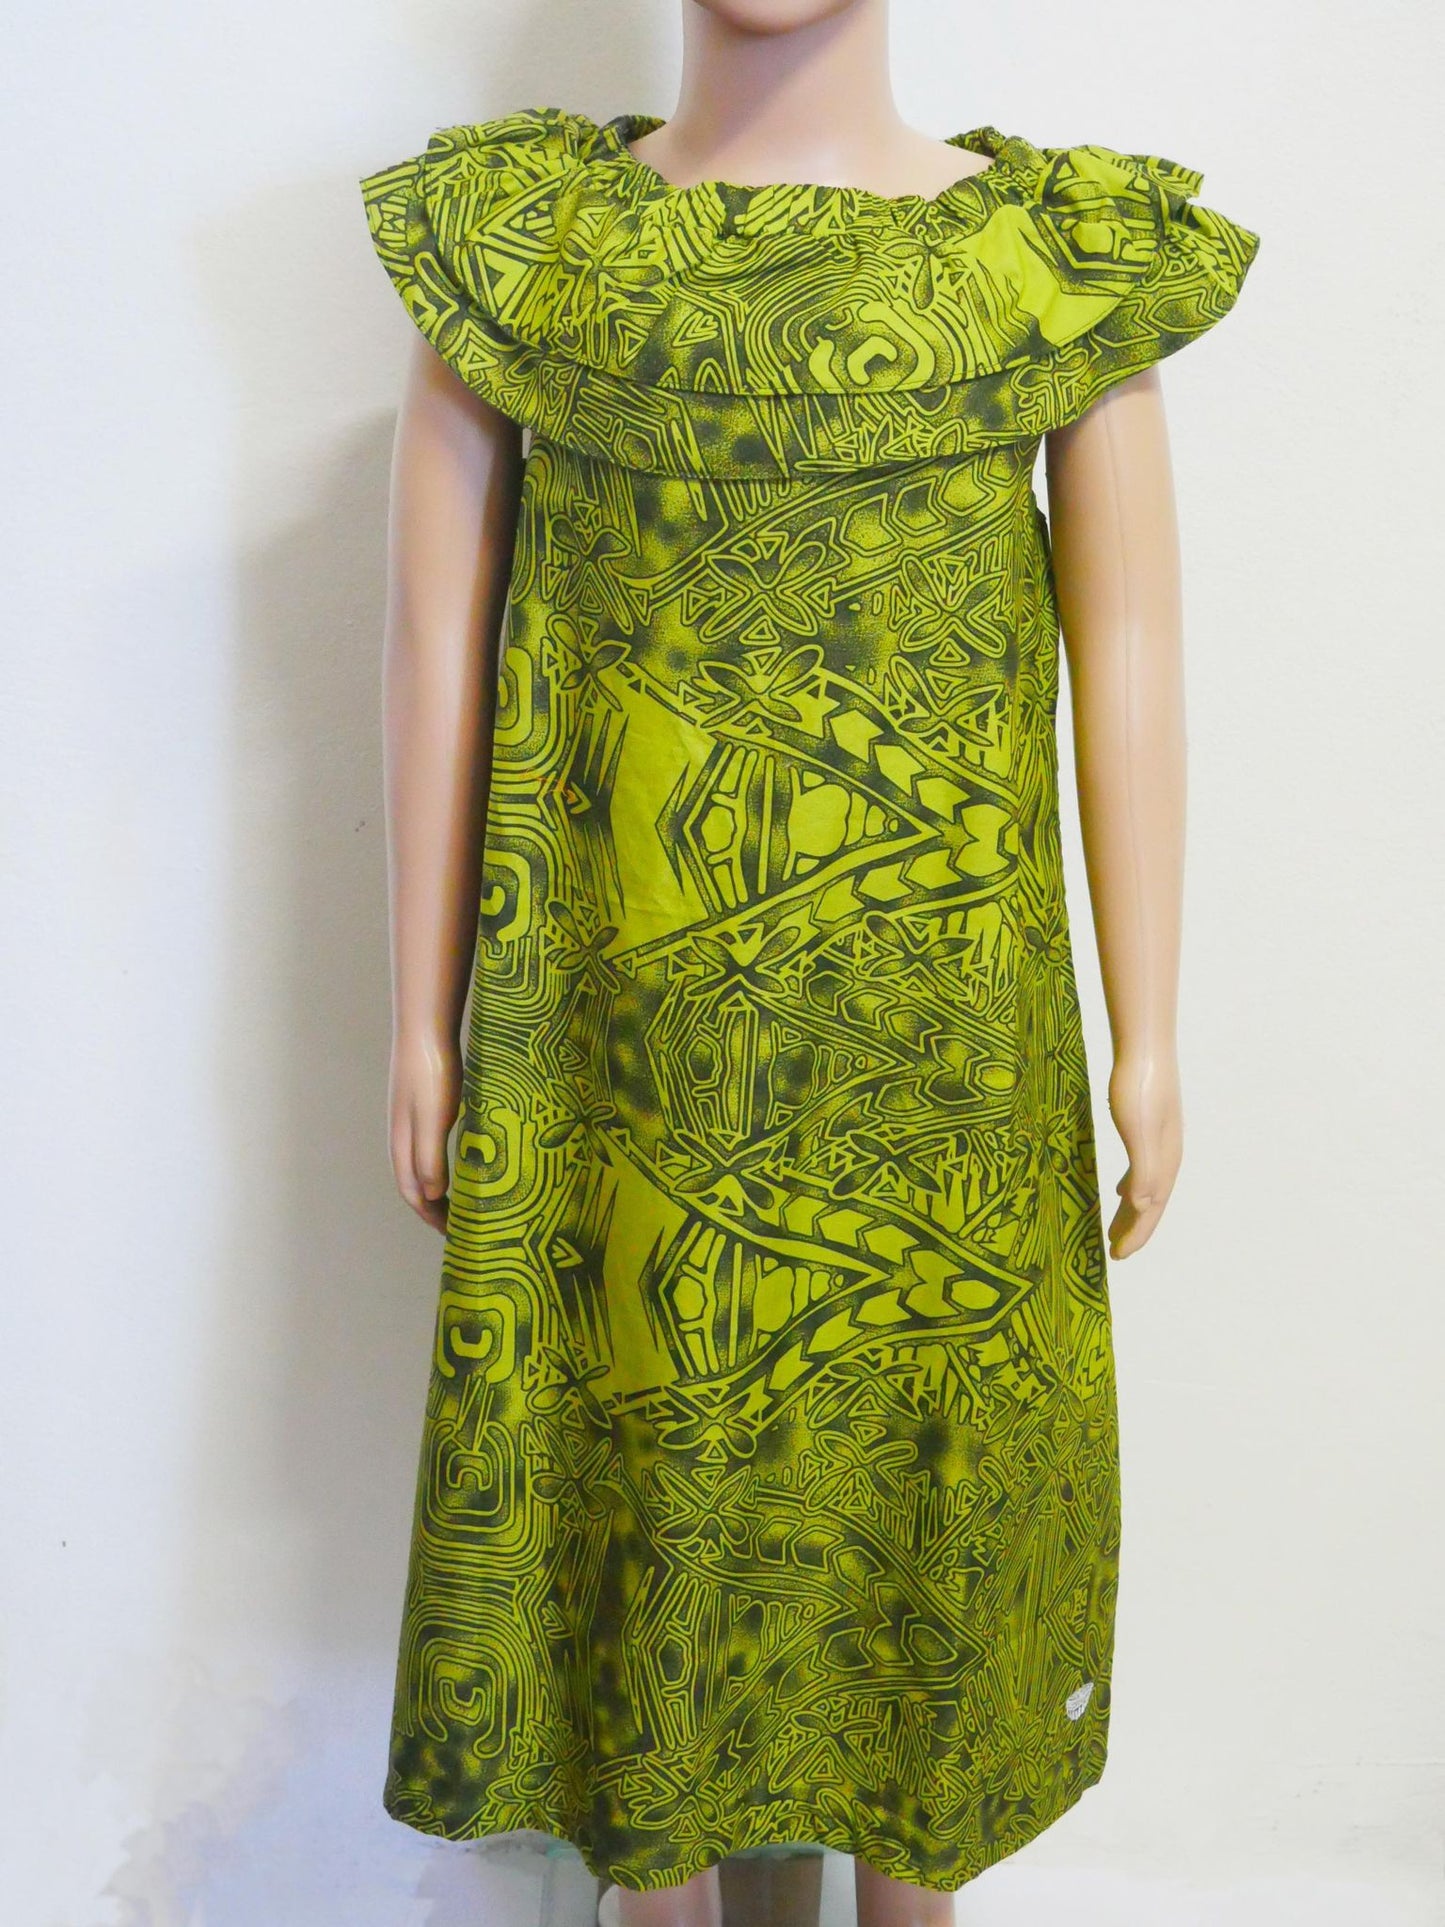 Tanoa Samoa Girl's Green Dress (Olive)